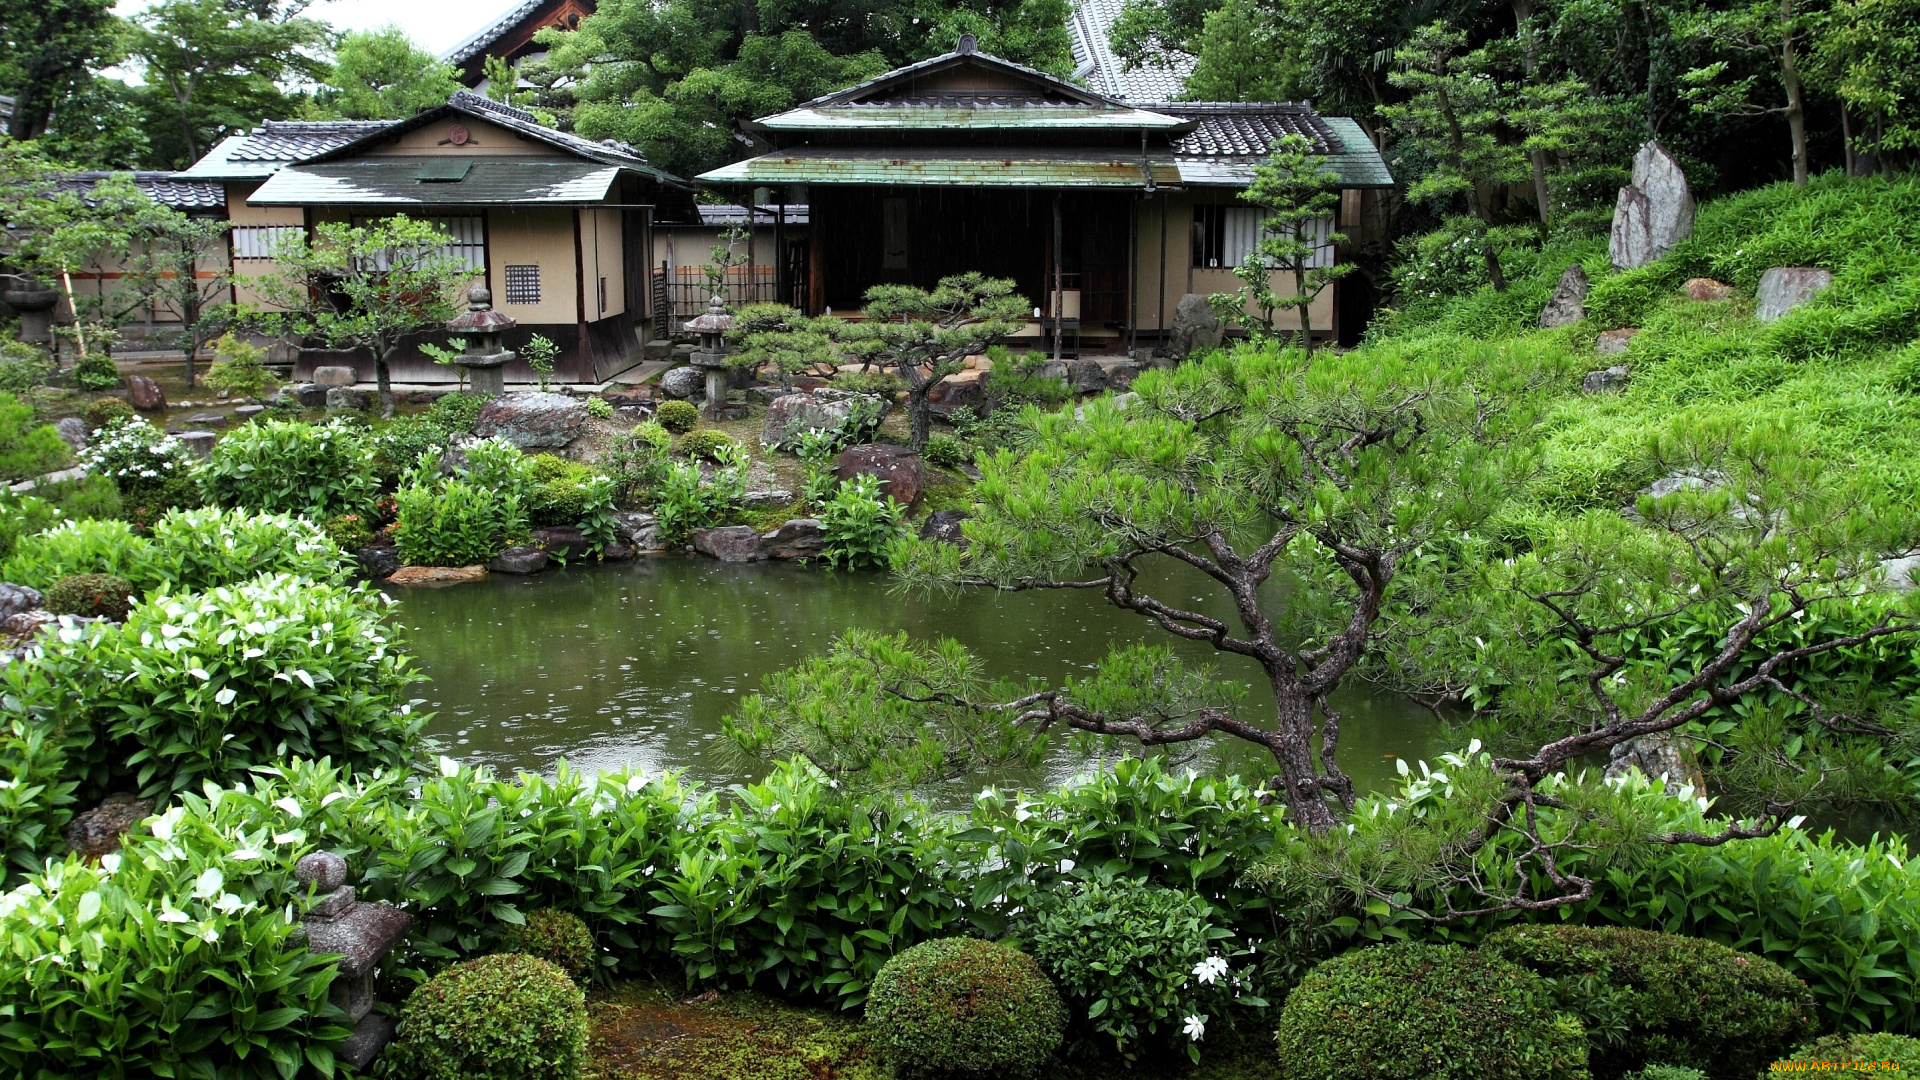 сад, хигасияма, киото, Япония, природа, парк, деревья, пруд, пагода